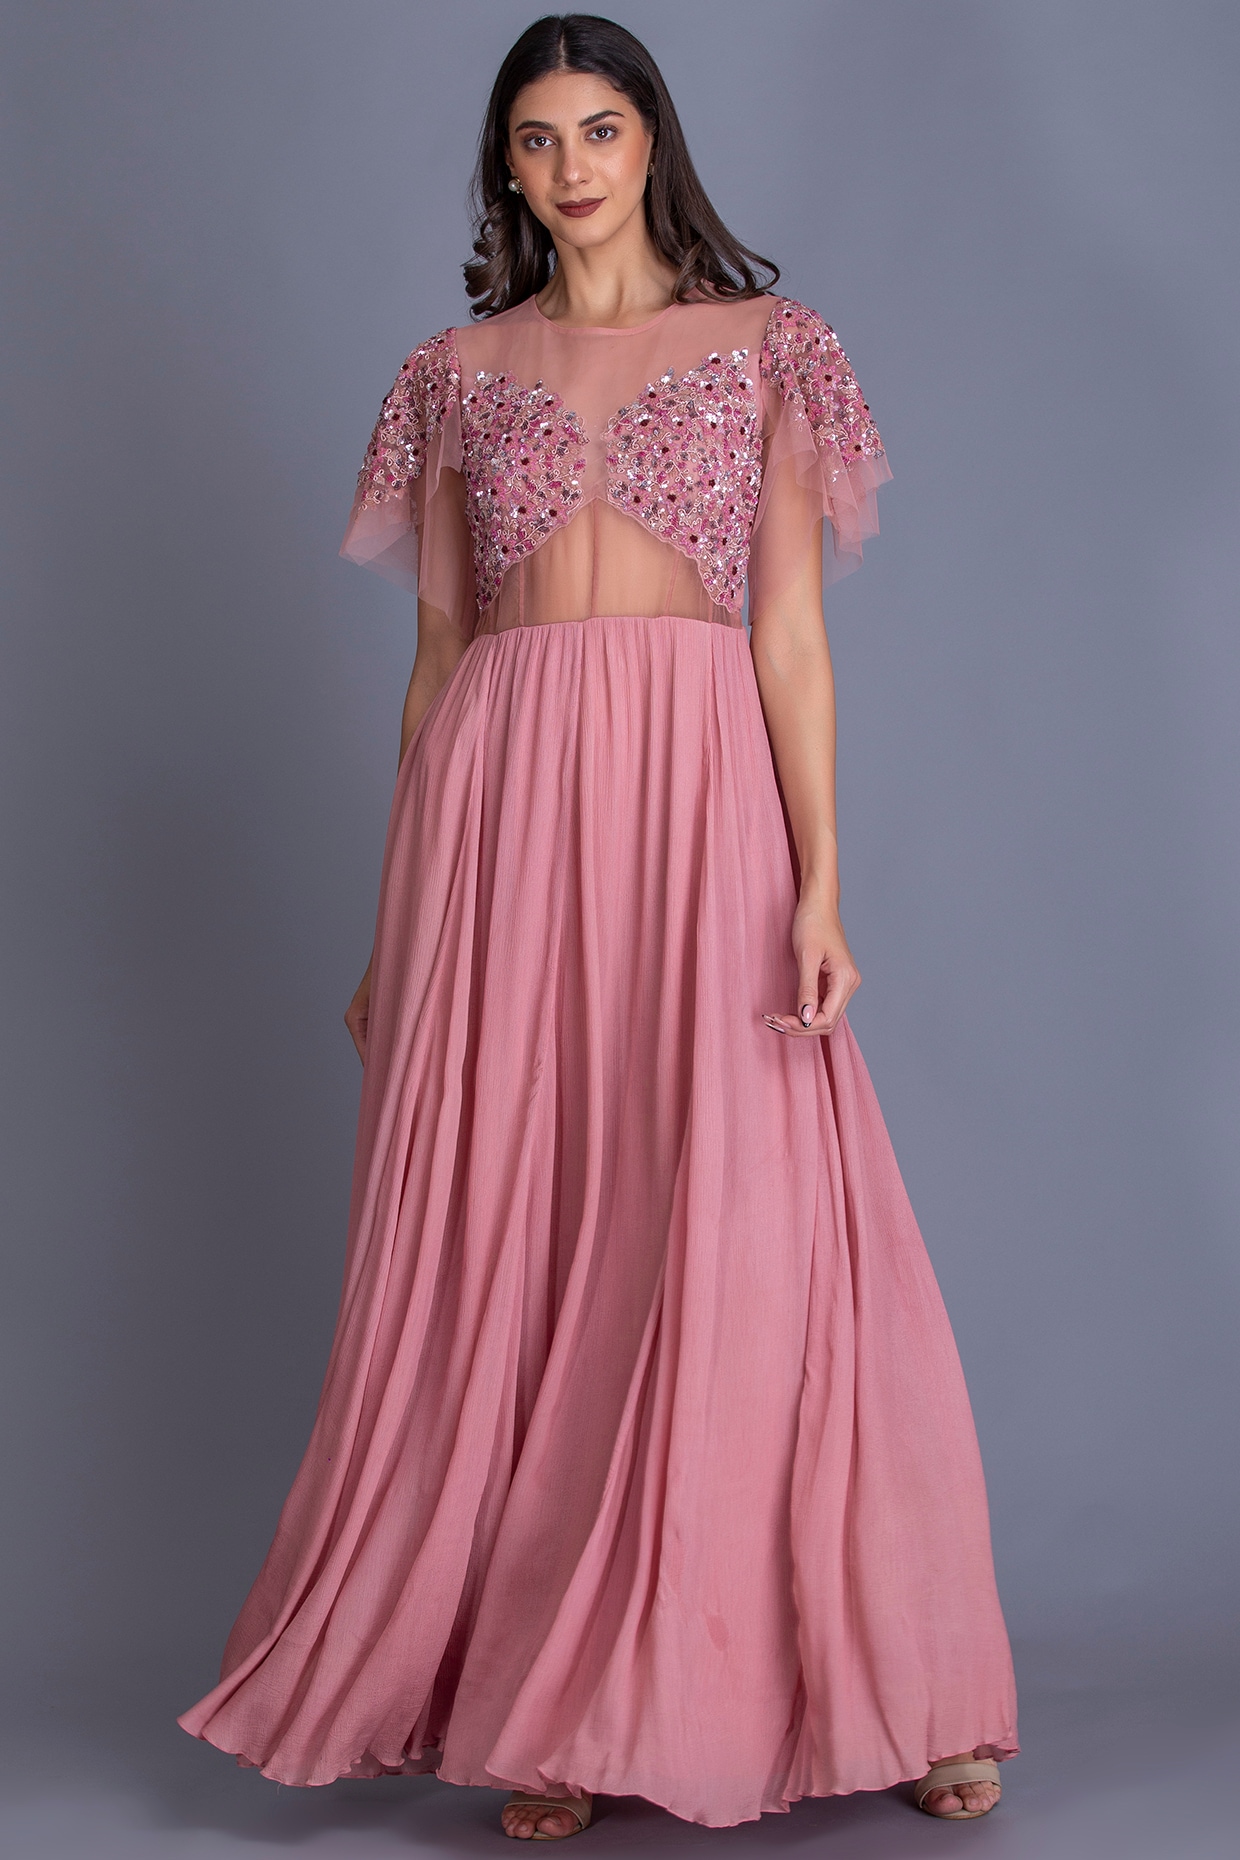 Blush pink wedding dress designs – graceful elegance in pale shades